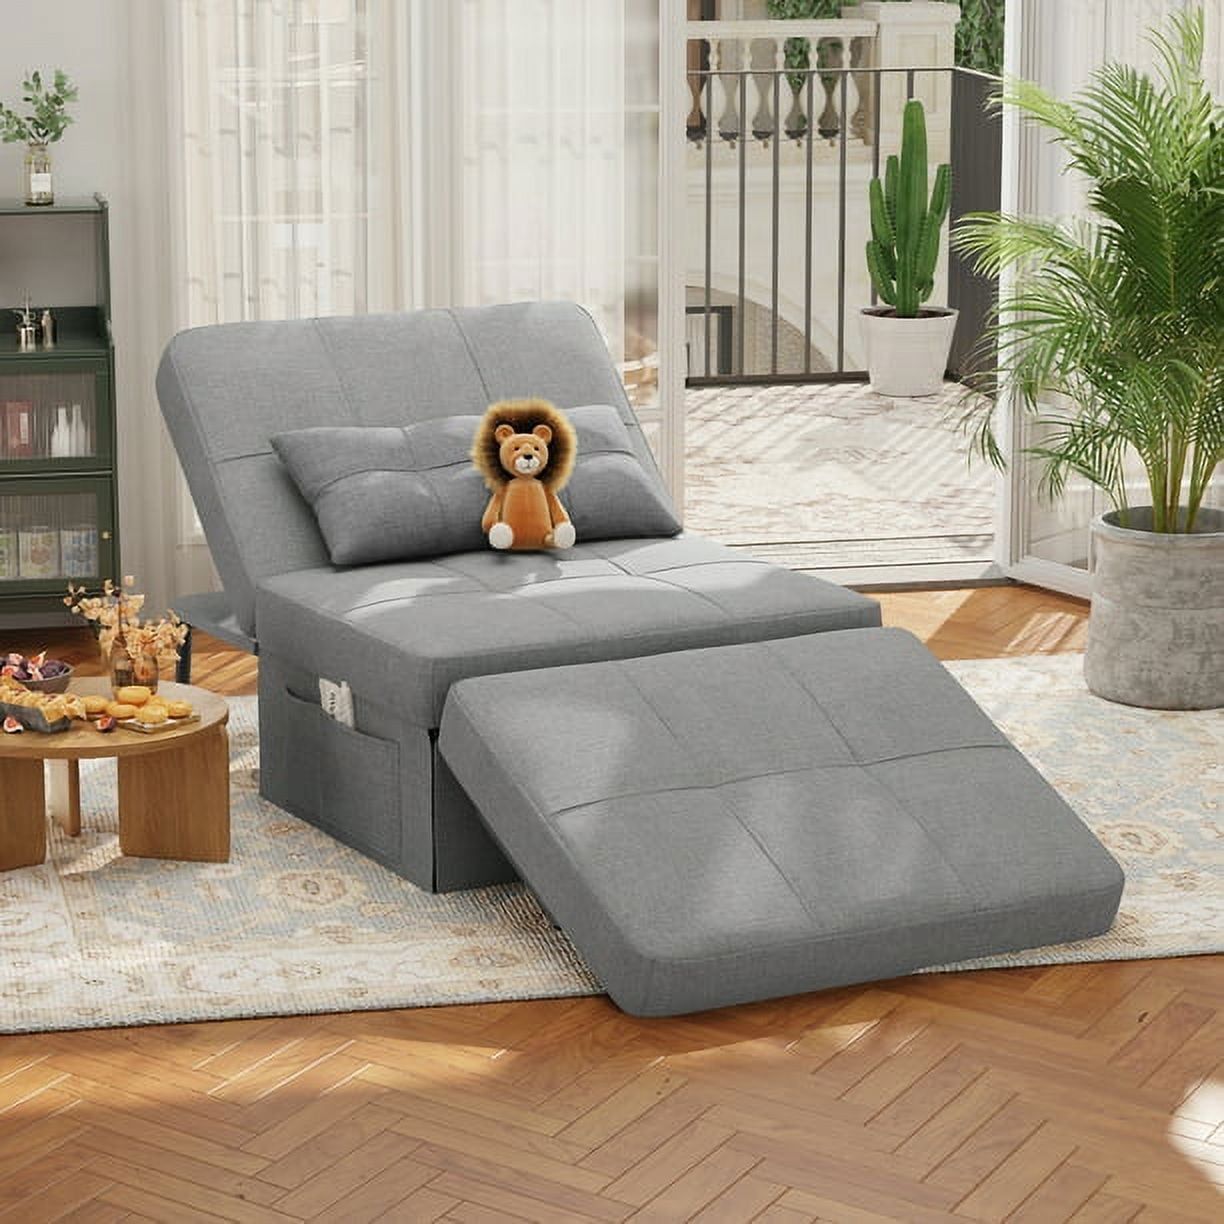 Chair Bed, Lofka Convertible Recliner Single Sofa Bed, Free Installation,  730 Lbs, Light Gray – Walmart Within Convertible Light Gray Chair Beds (Photo 1 of 15)